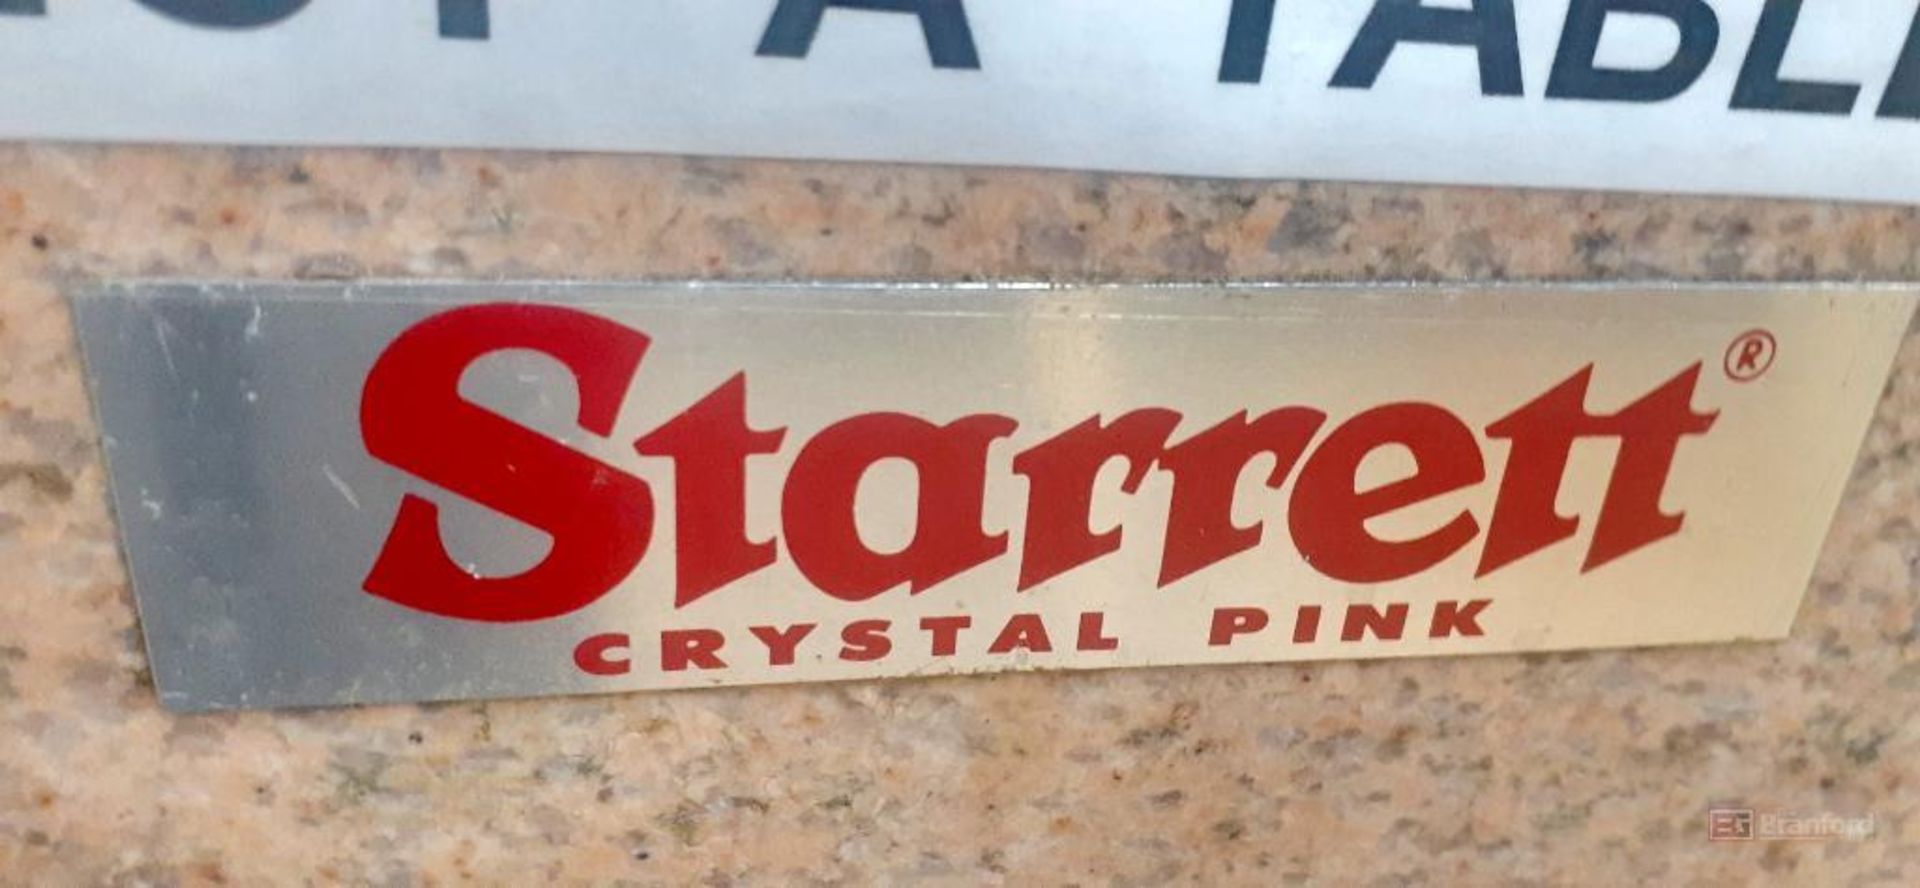 Starrett Granite Surface Plate - Image 3 of 4